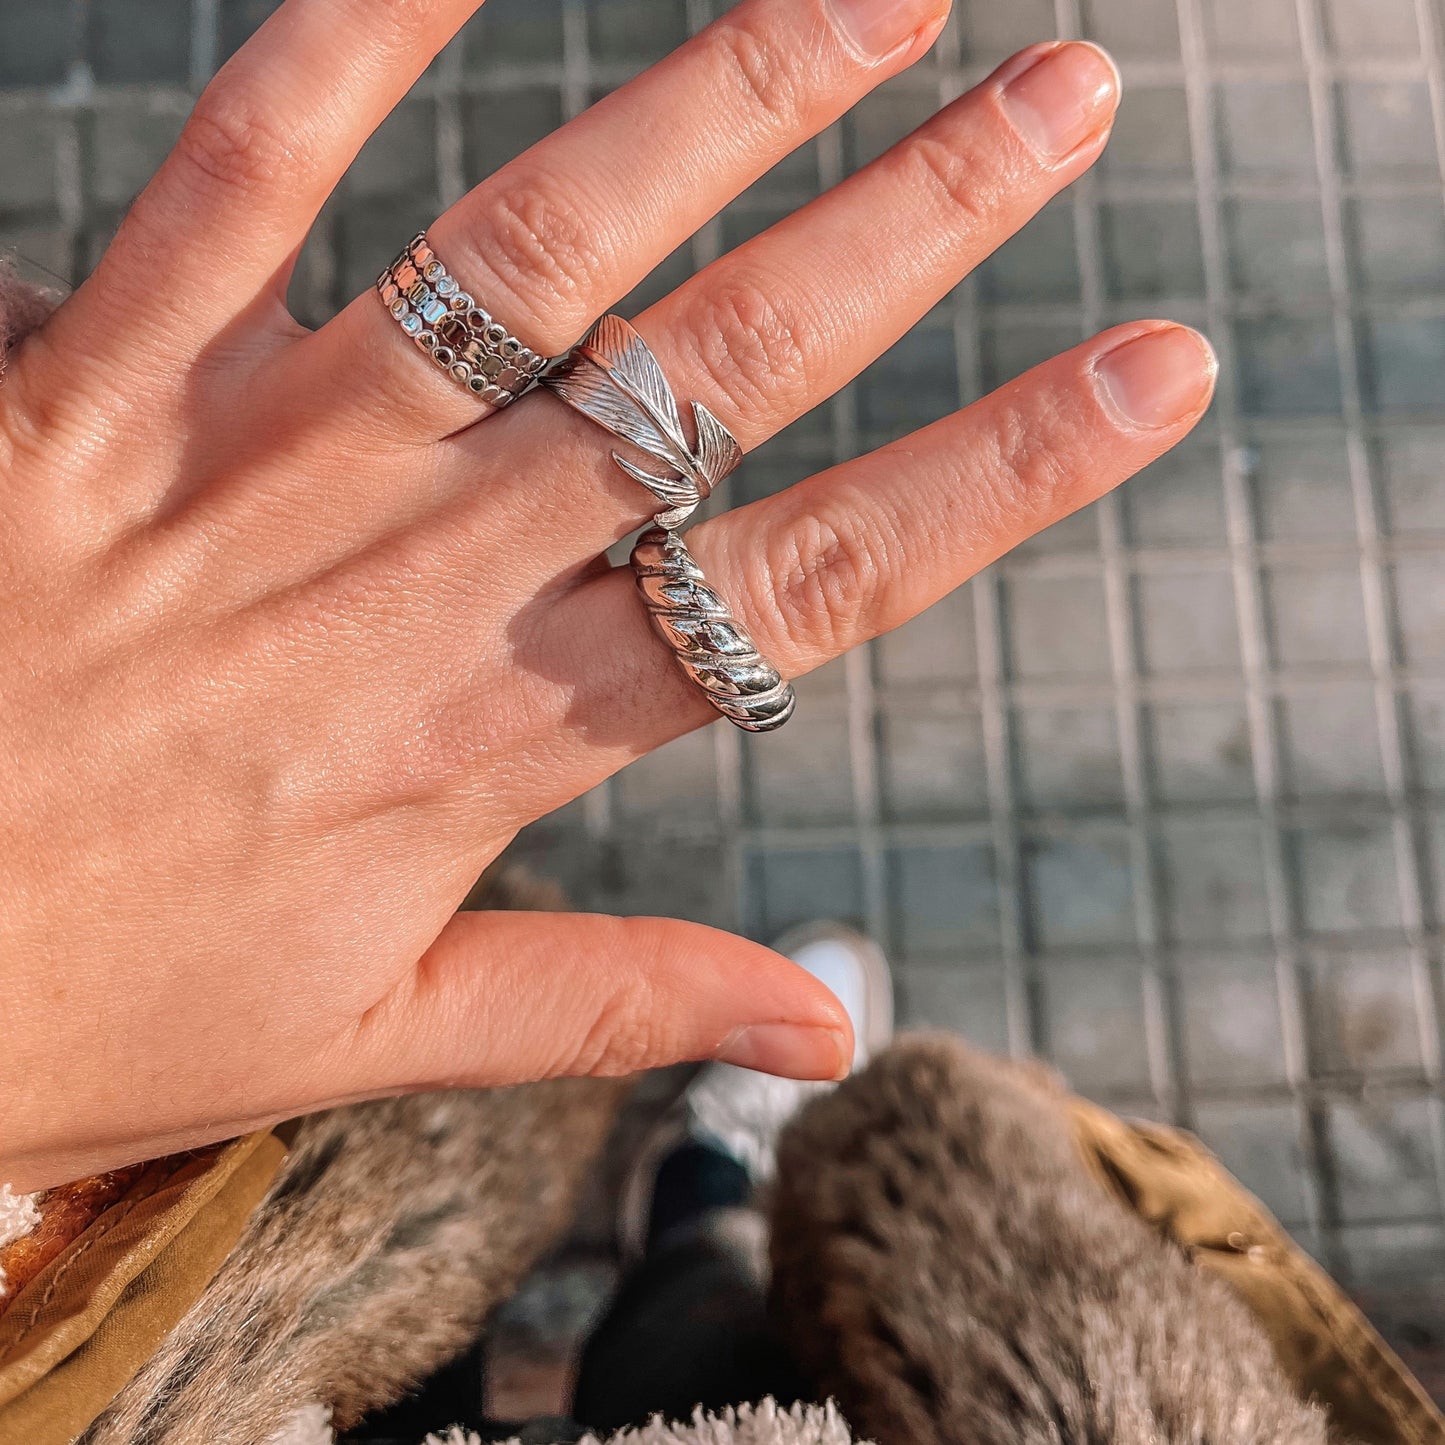 Blois silver ring